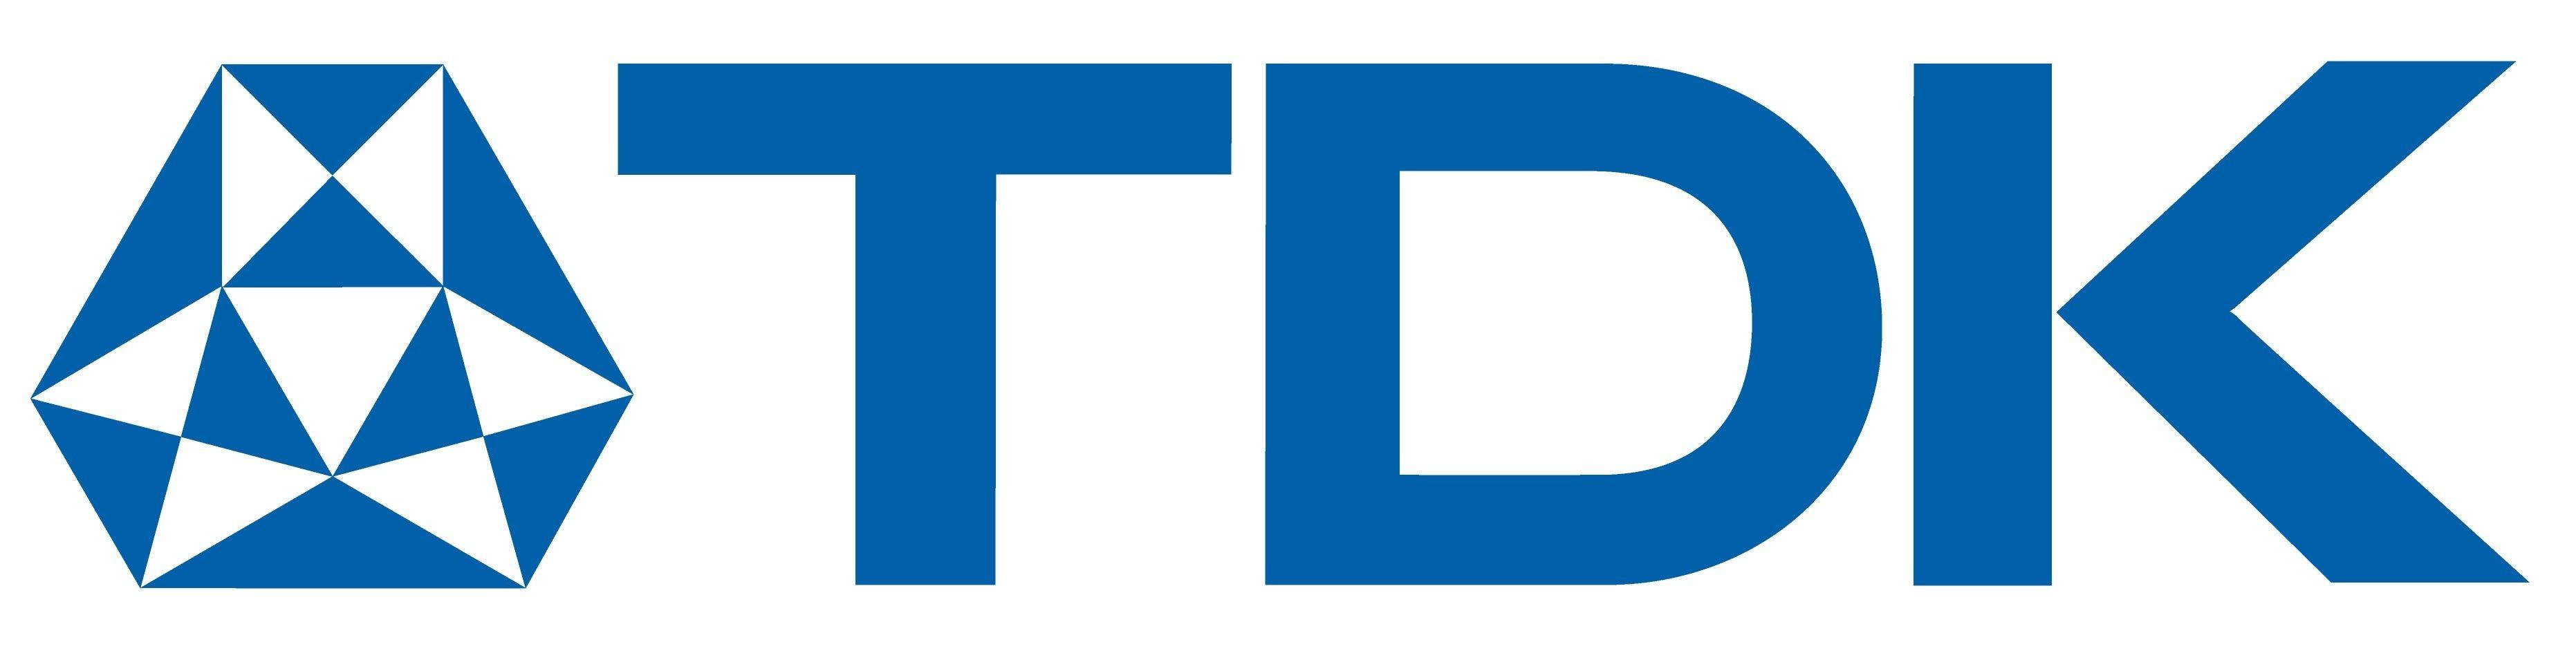 EMC Corp Logo - TDK Corp logo - Electronic Products & Technology